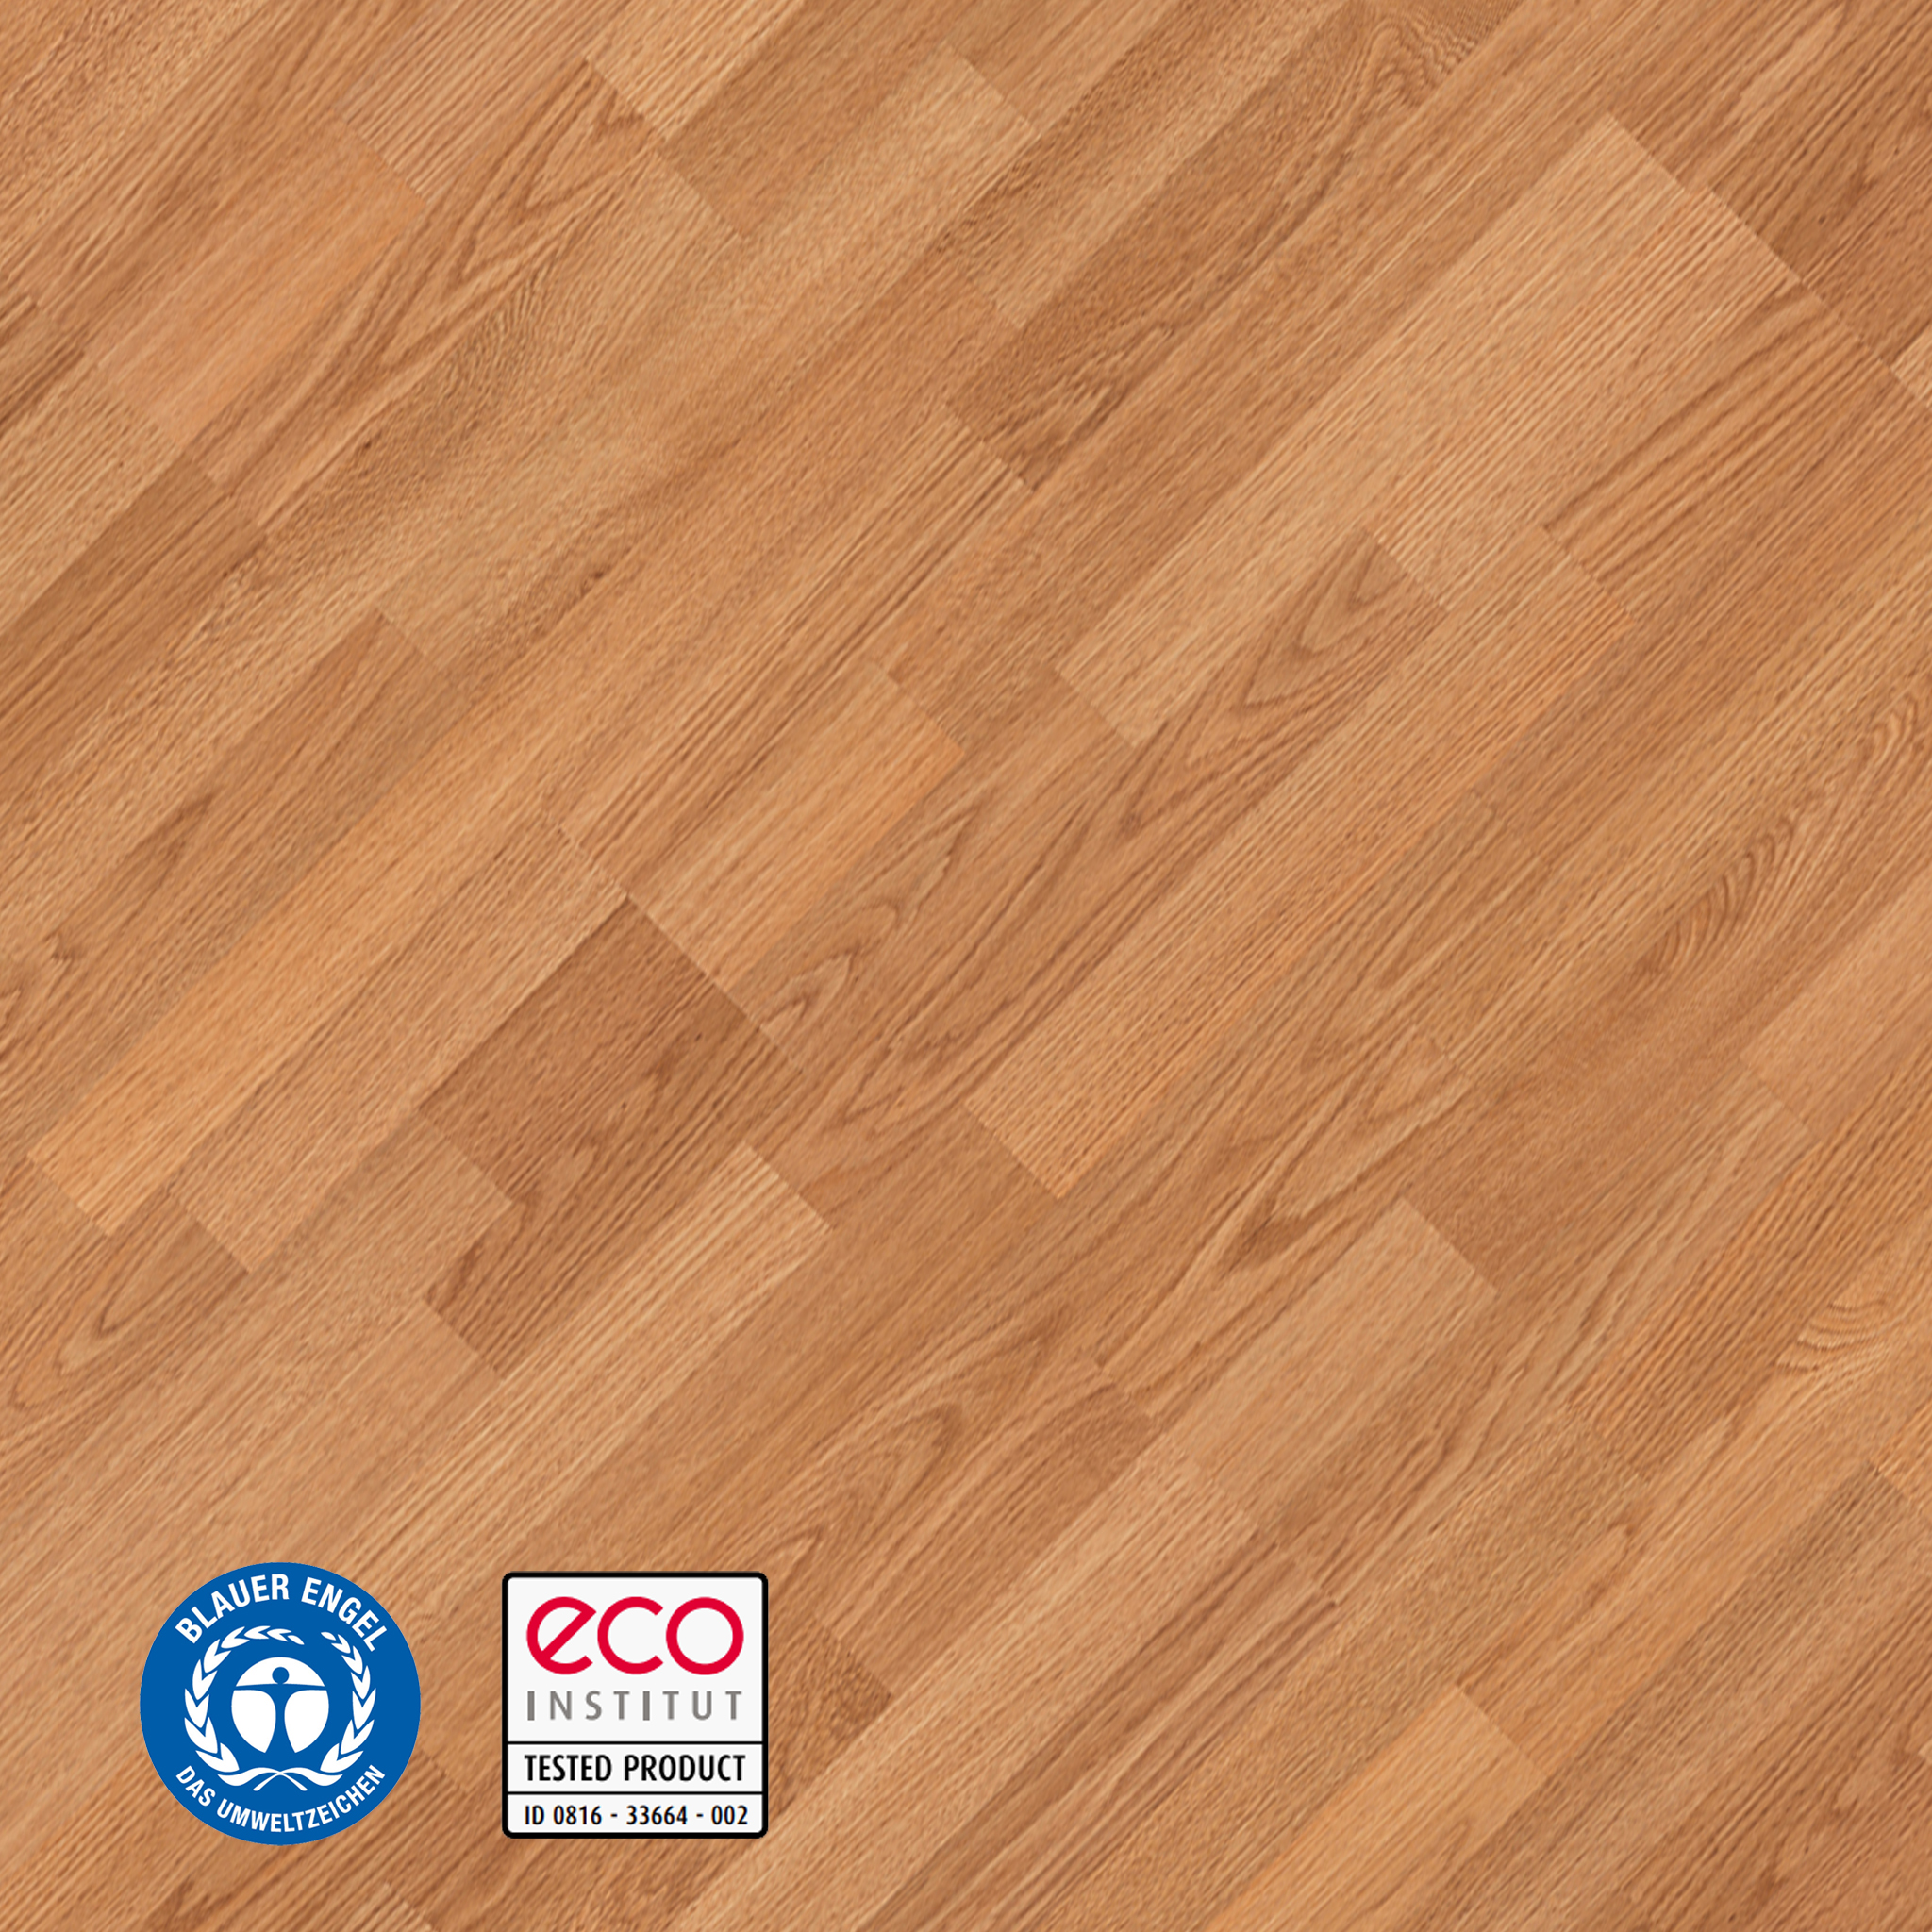 eterna Loc 7 Oak select laminate floor